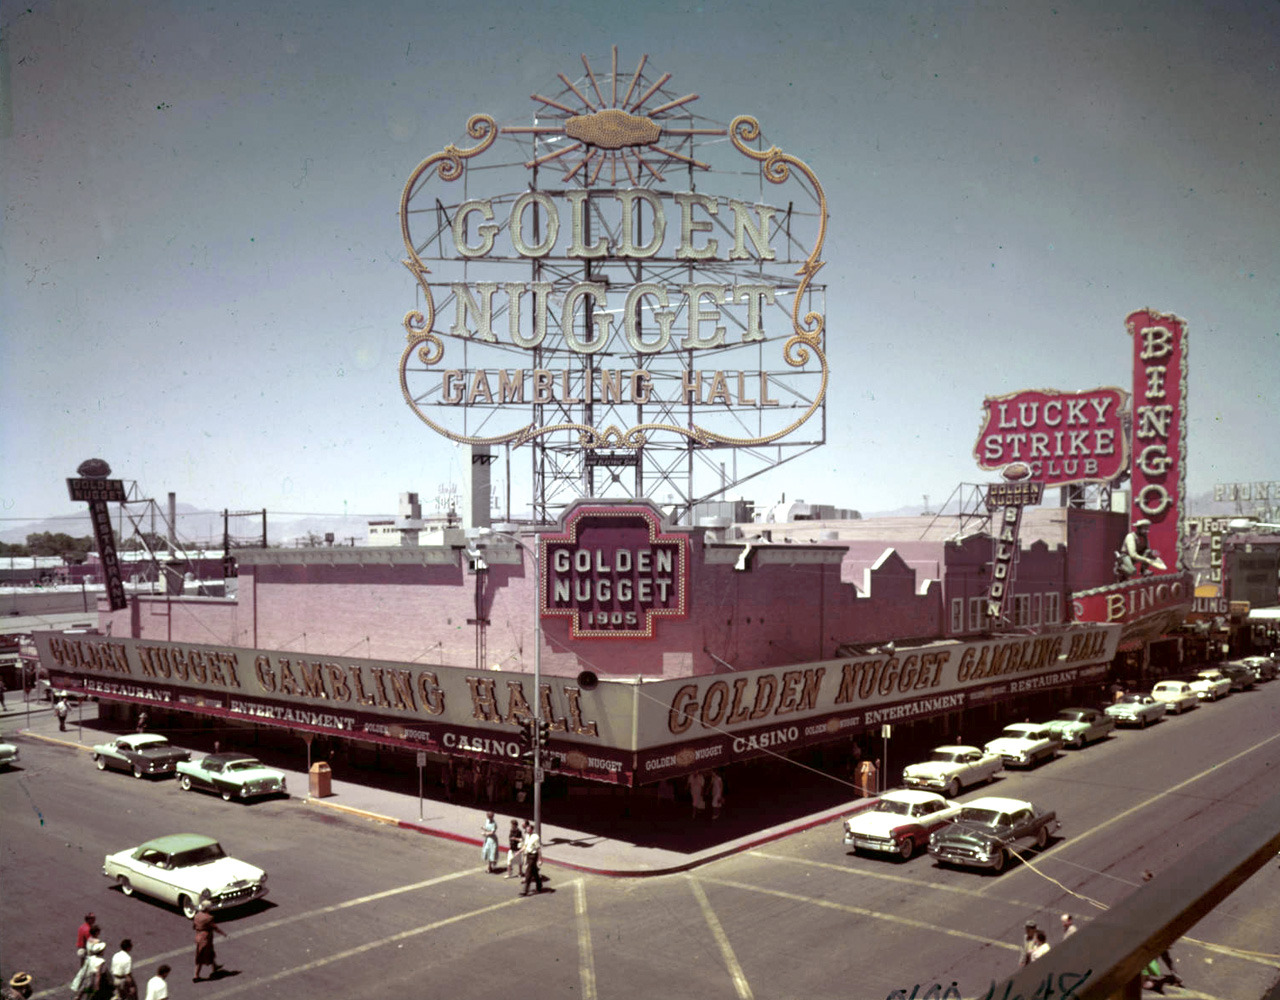 Details about   Vintage Golden Nugget Hotel Casino Las Vegas Nevada matchbook  LQQK #6 